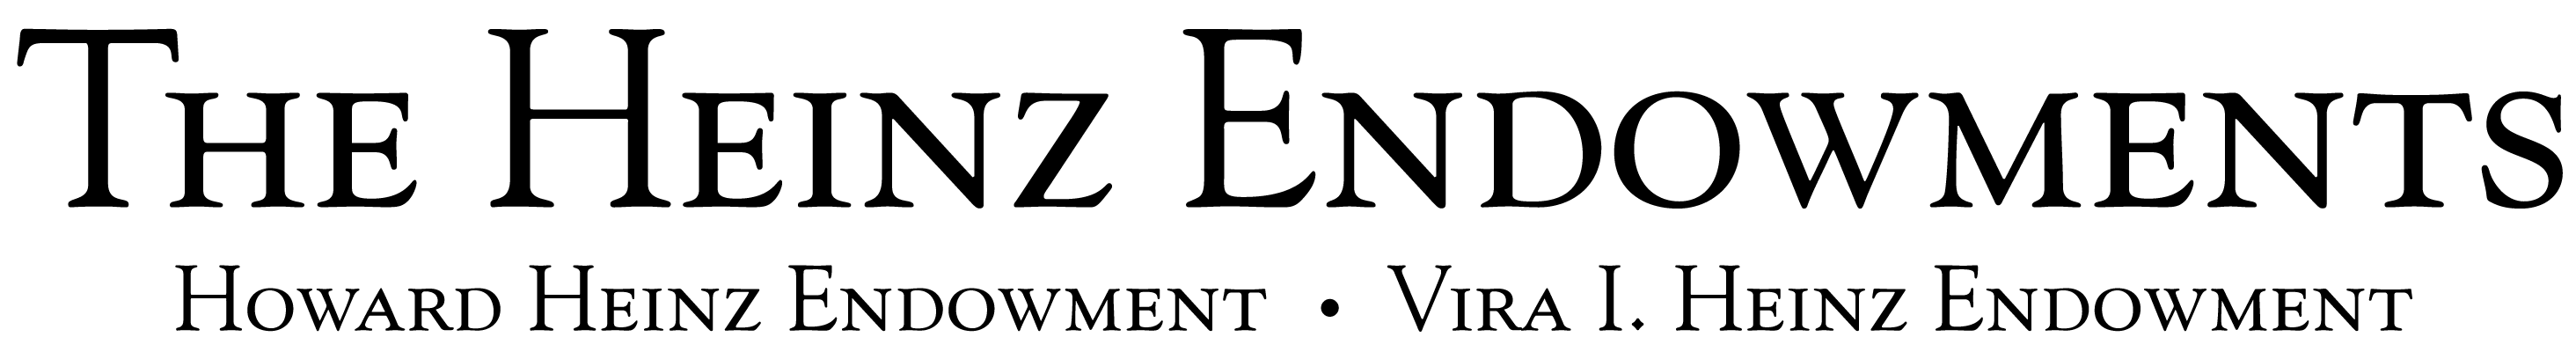 The Heinz Endowments logo